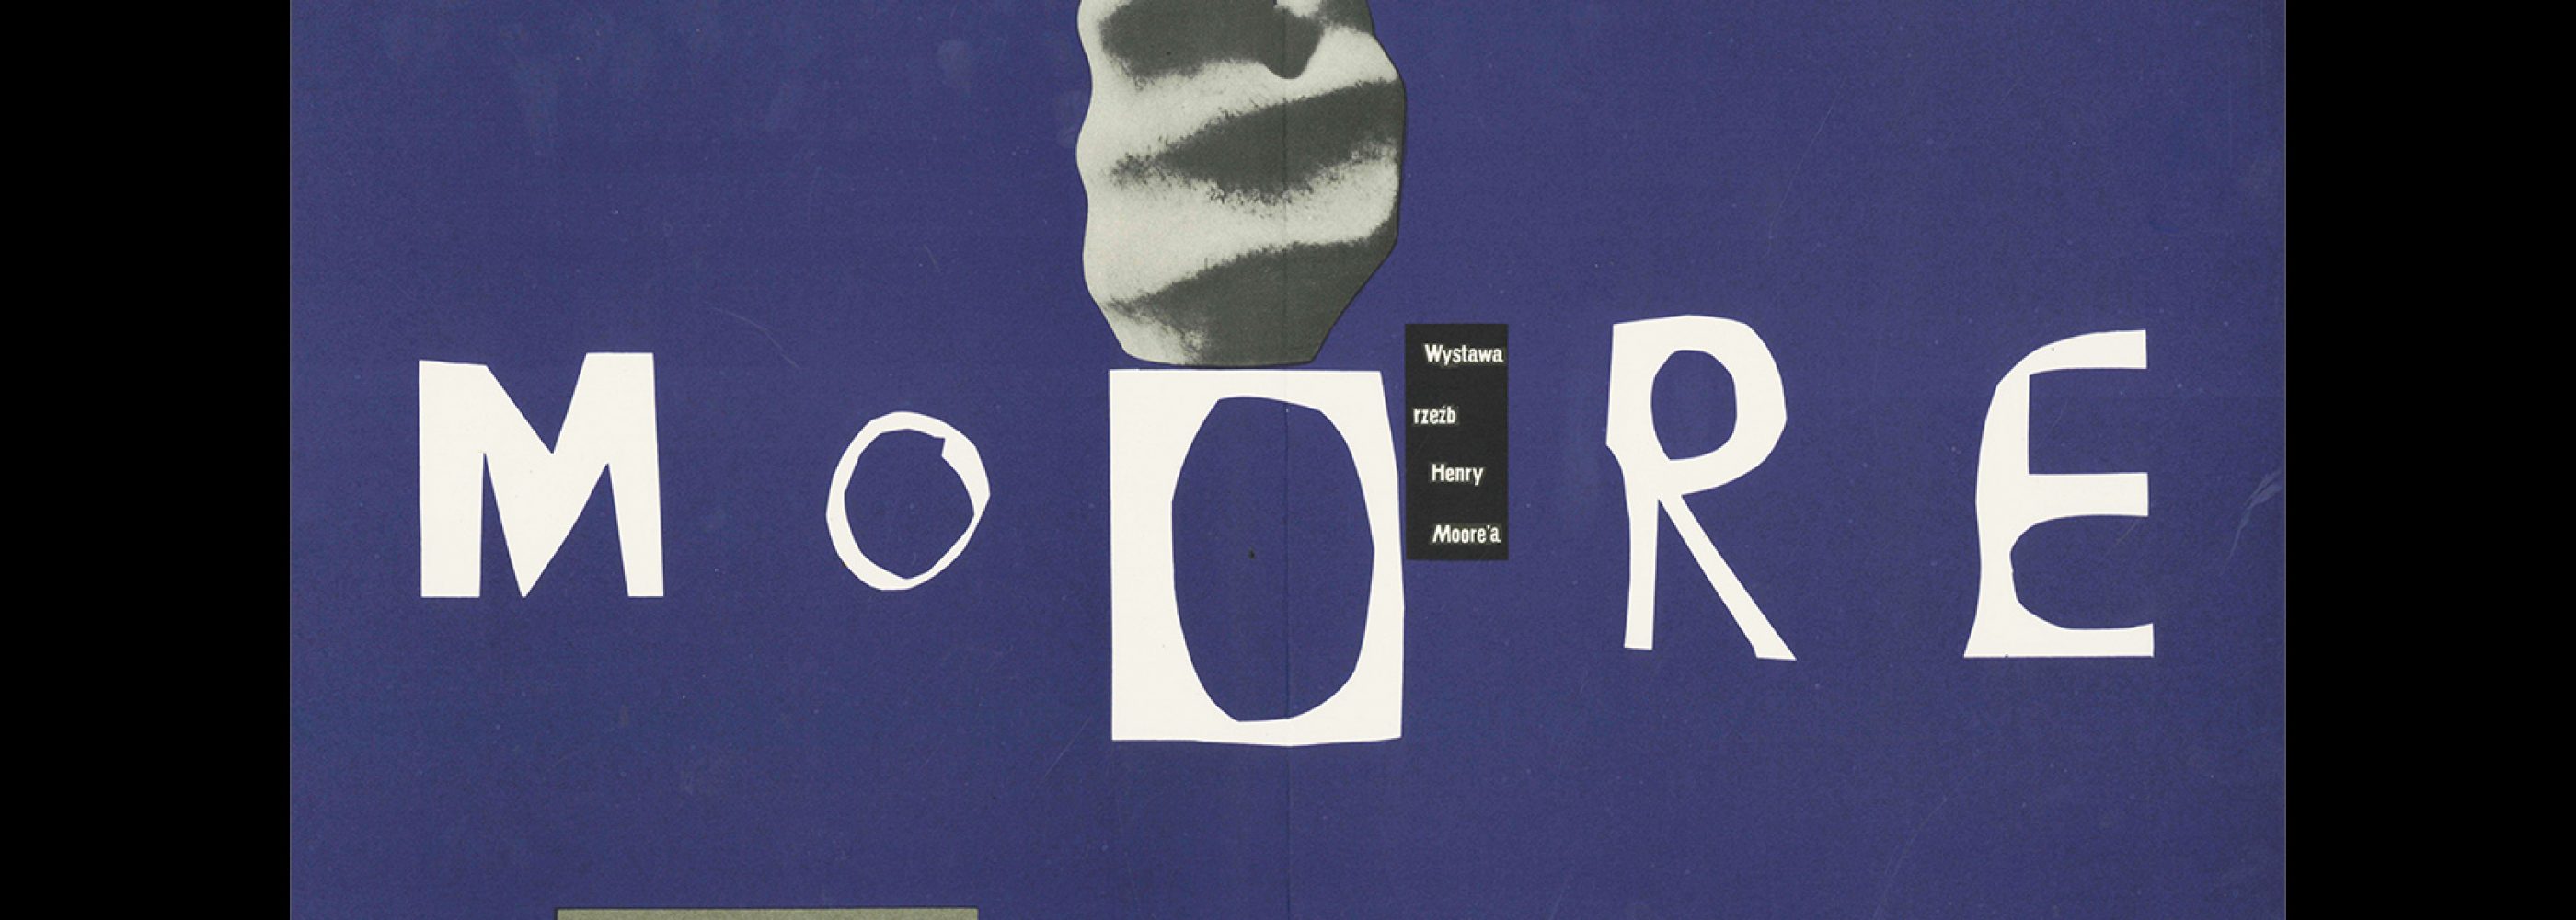 Moore, 1965 Reissue Poster. Designed by Henryk Tomaszewski